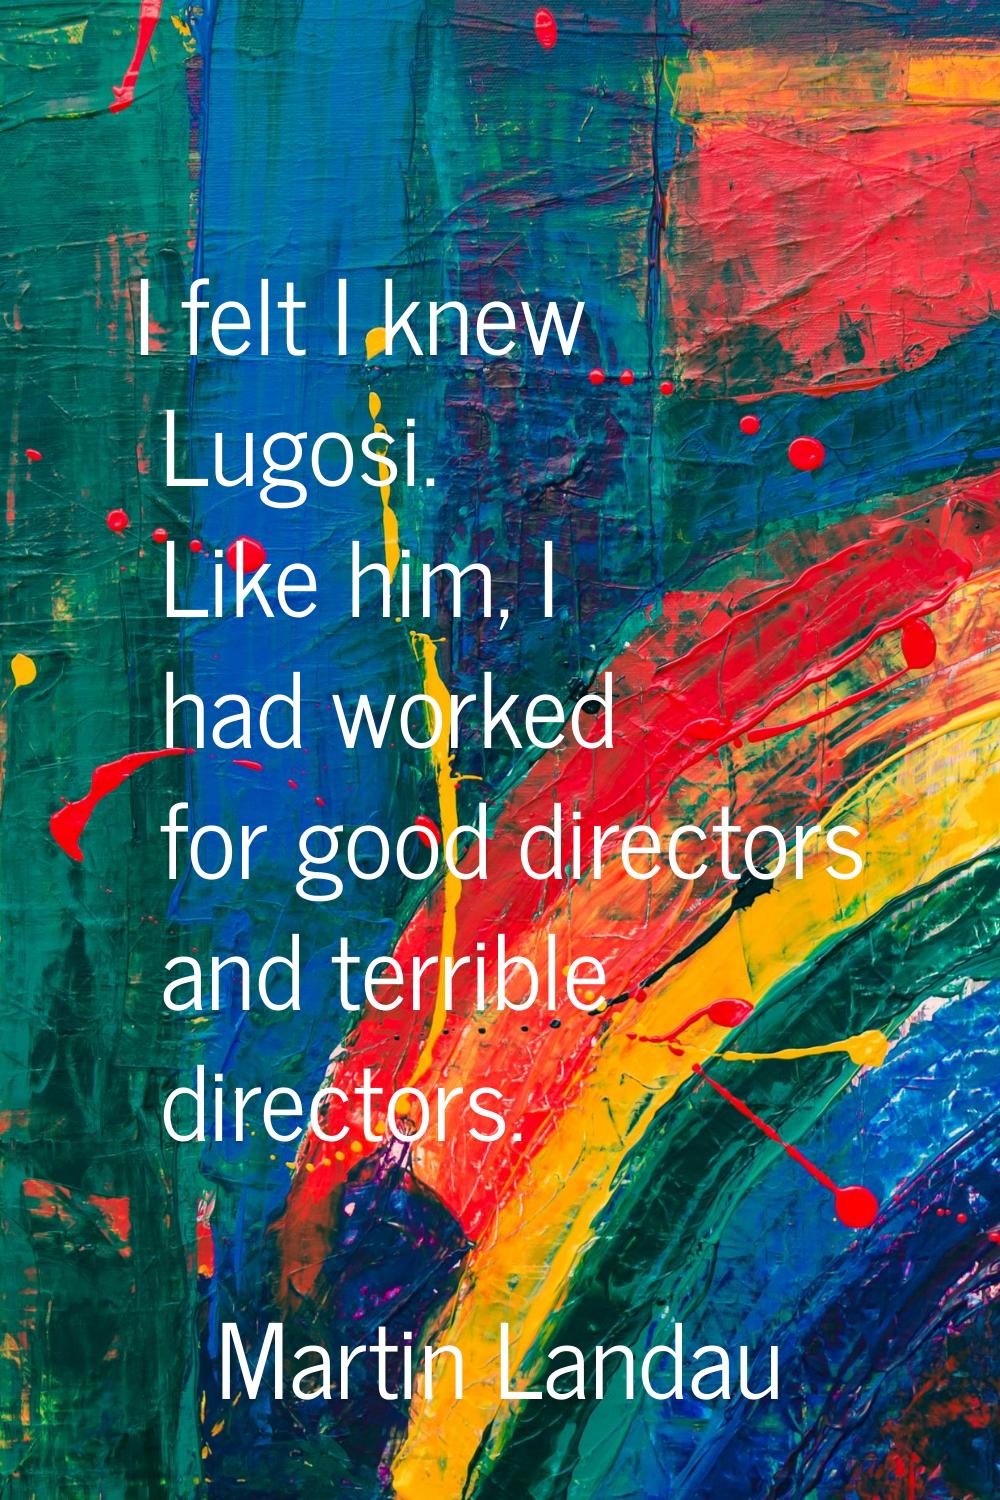 I felt I knew Lugosi. Like him, I had worked for good directors and terrible directors.